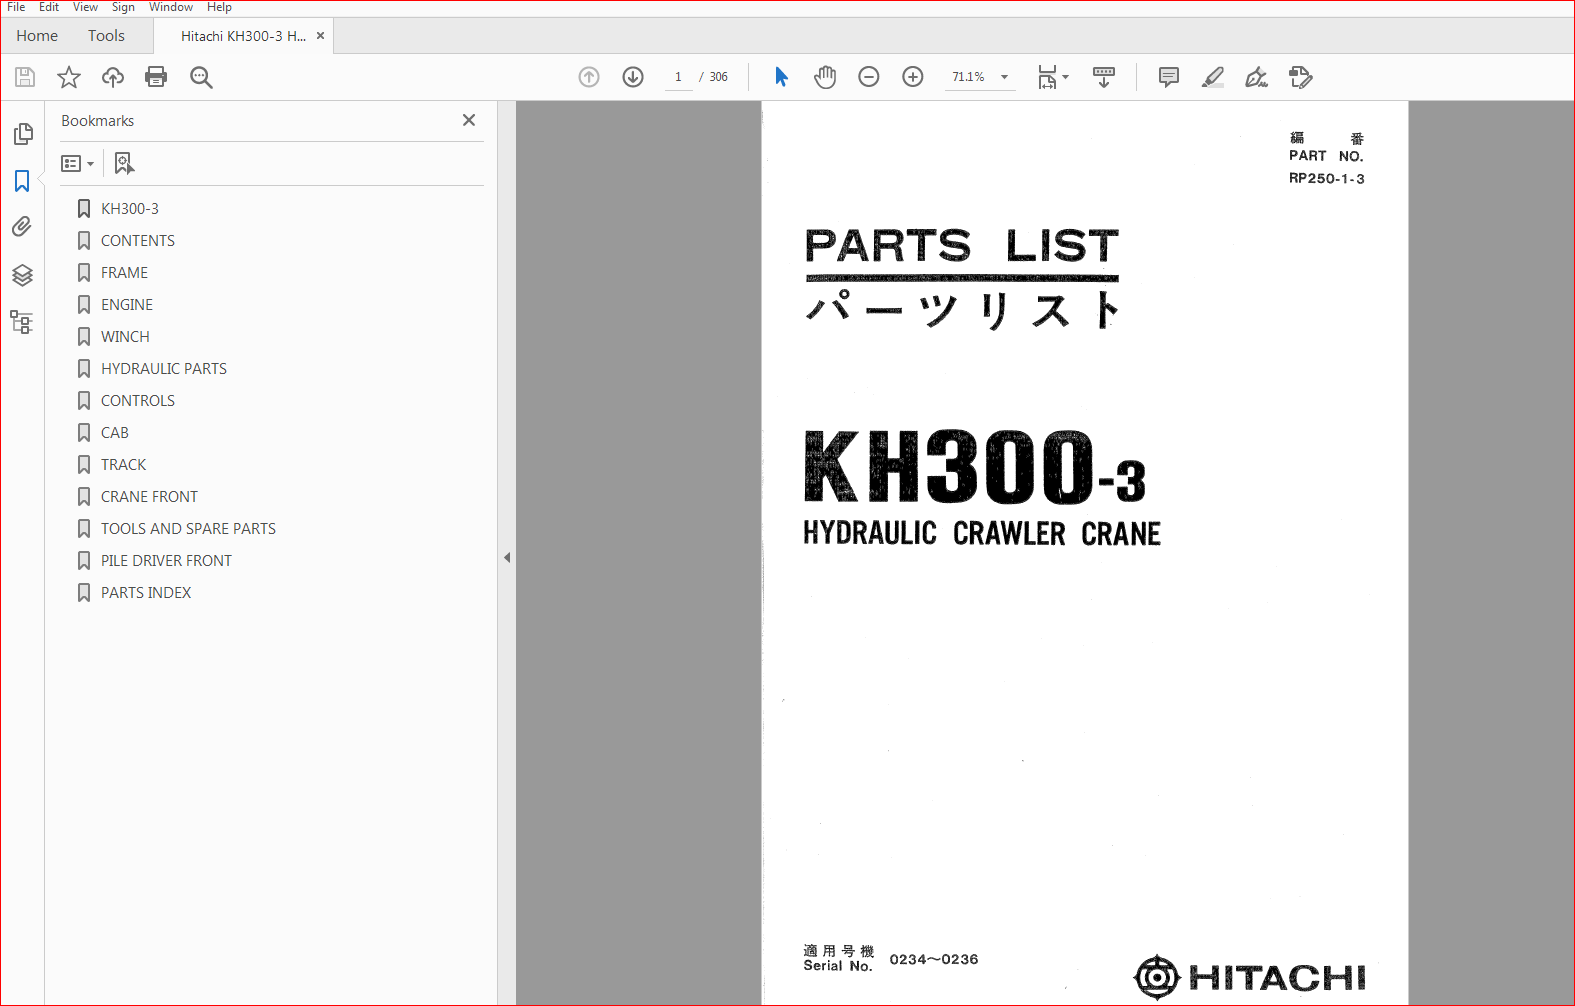 Hitachi Kh300 3 Hydraulic Crawler Crane Parts Catalog Manual Pdf Download Heydownloads Manual Downloads